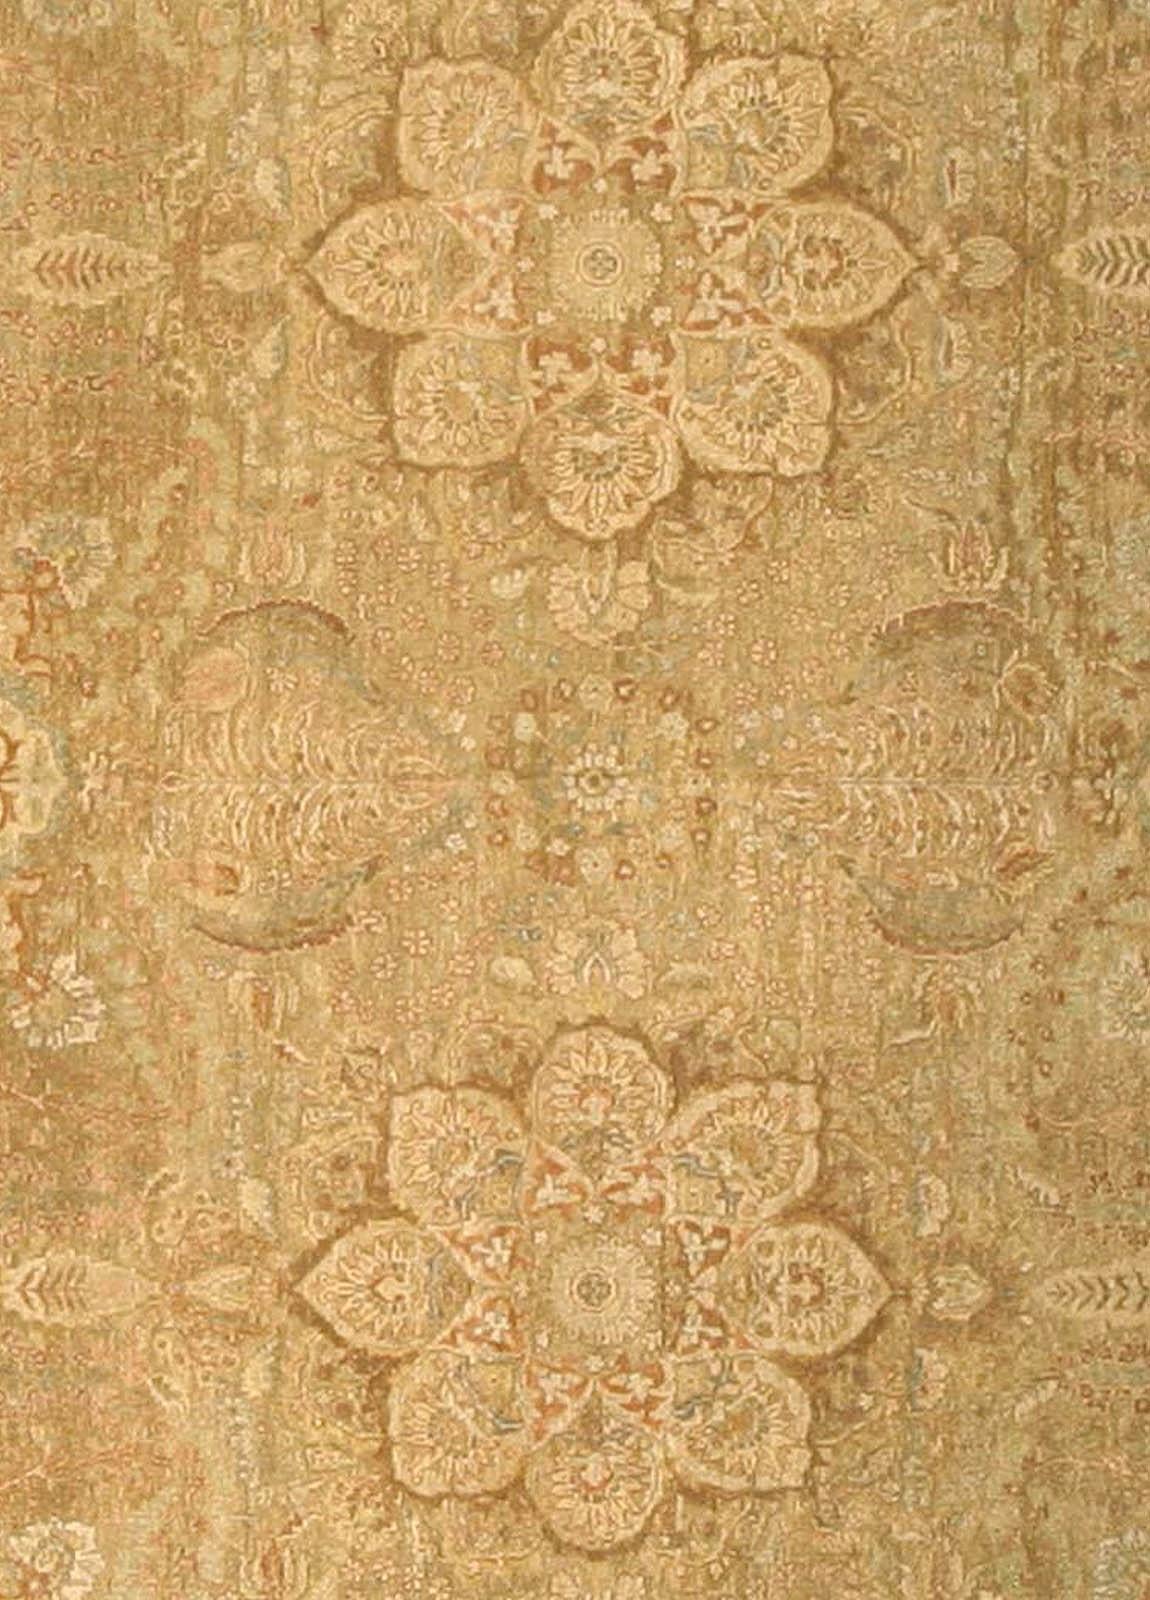 Contemporary Tabriz floral design beige handmade rug by Doris Leslie Blau
Size: 9'0